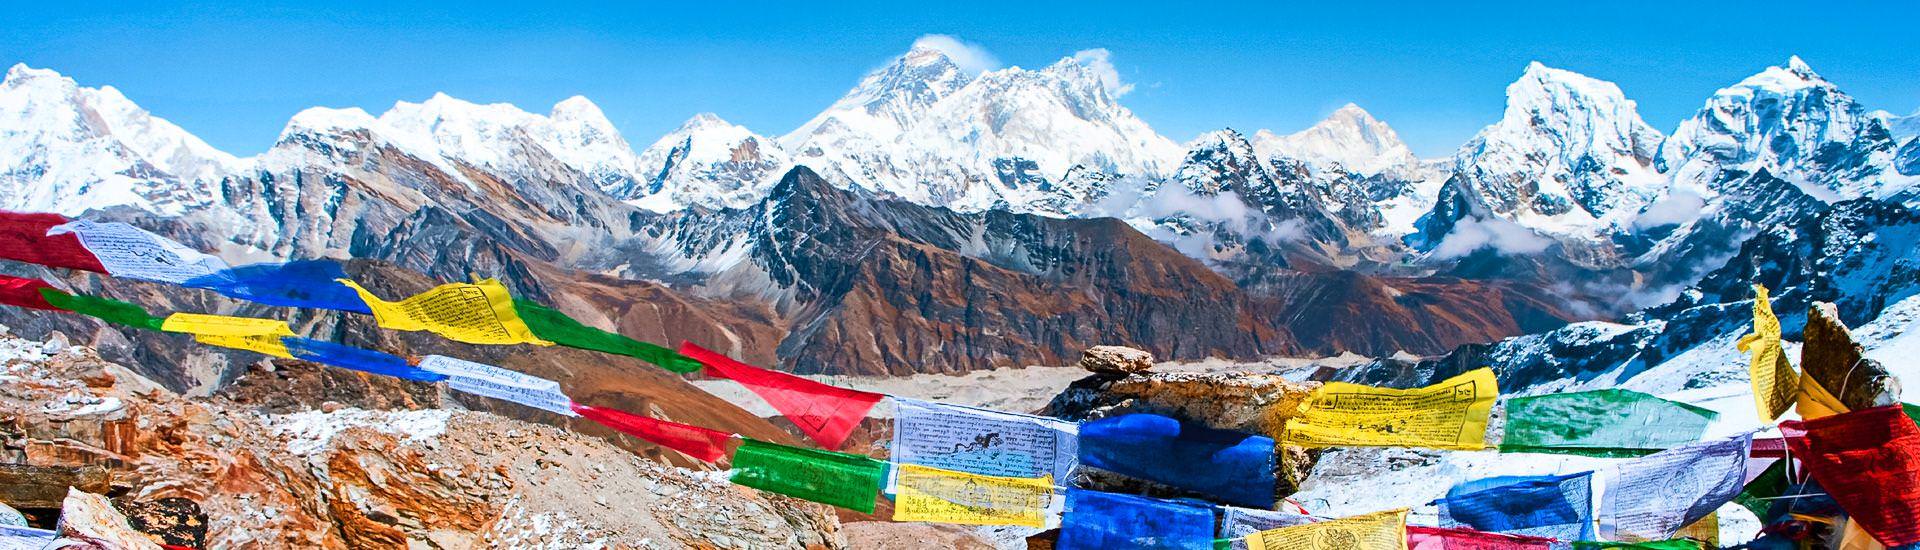 Blick auf den Mount Everest, Lhotse und Nuptse | 